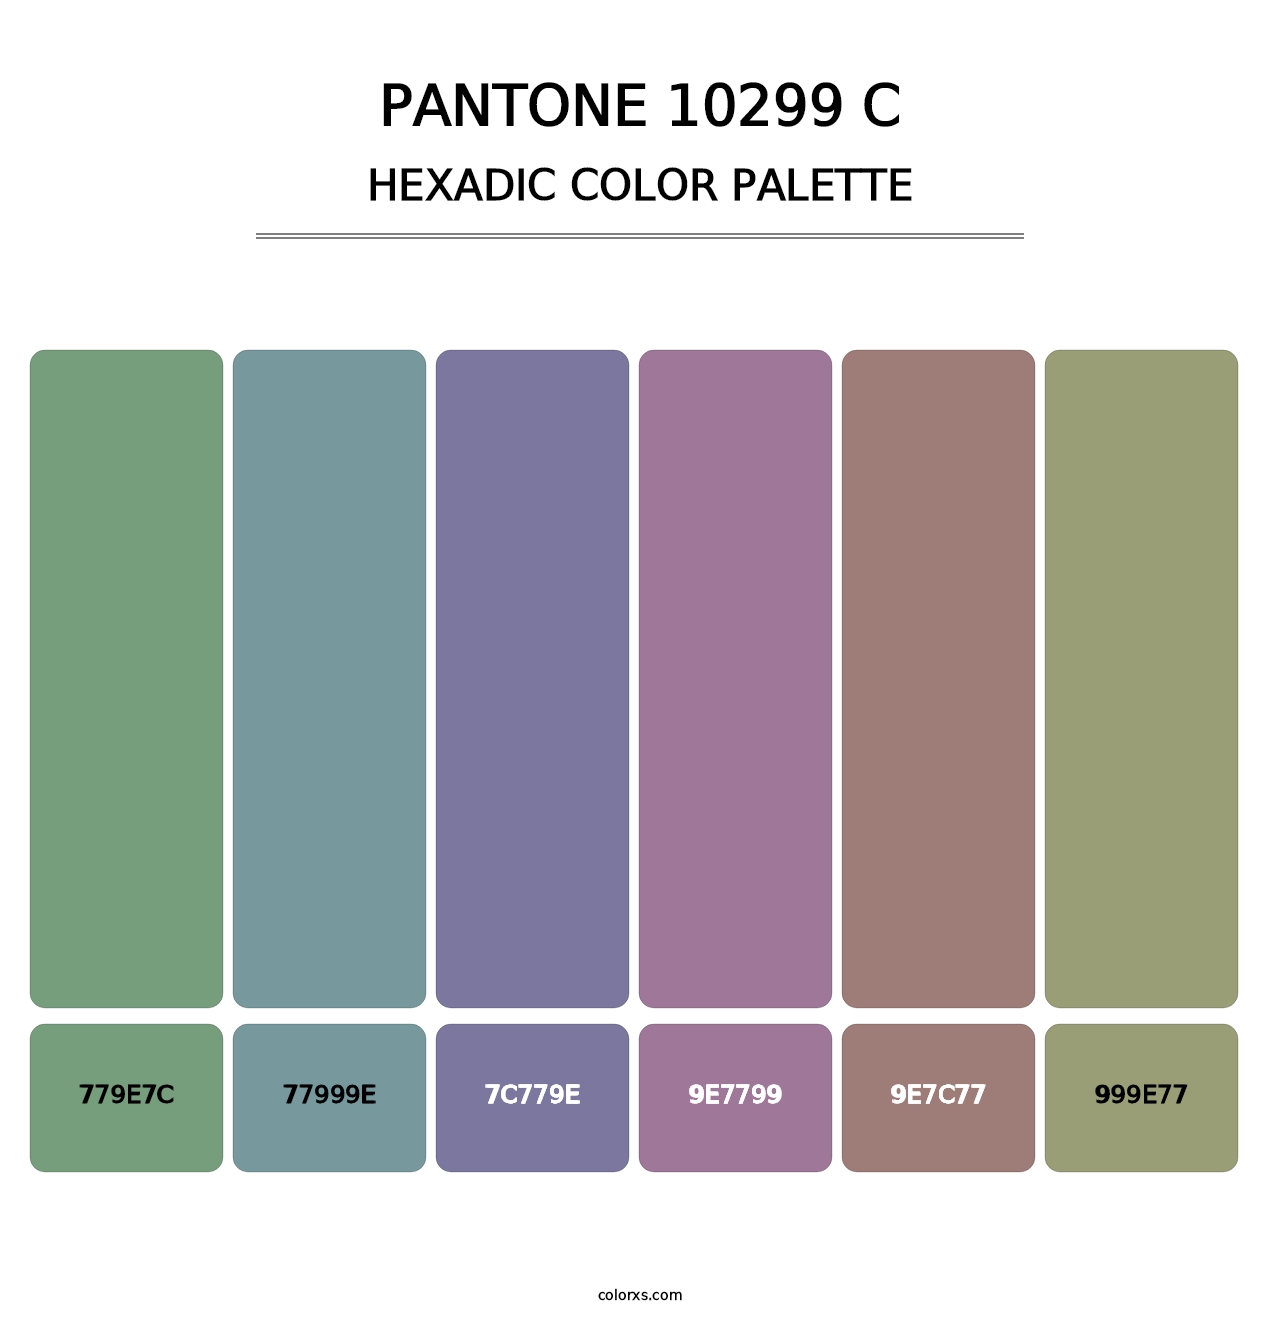 PANTONE 10299 C - Hexadic Color Palette